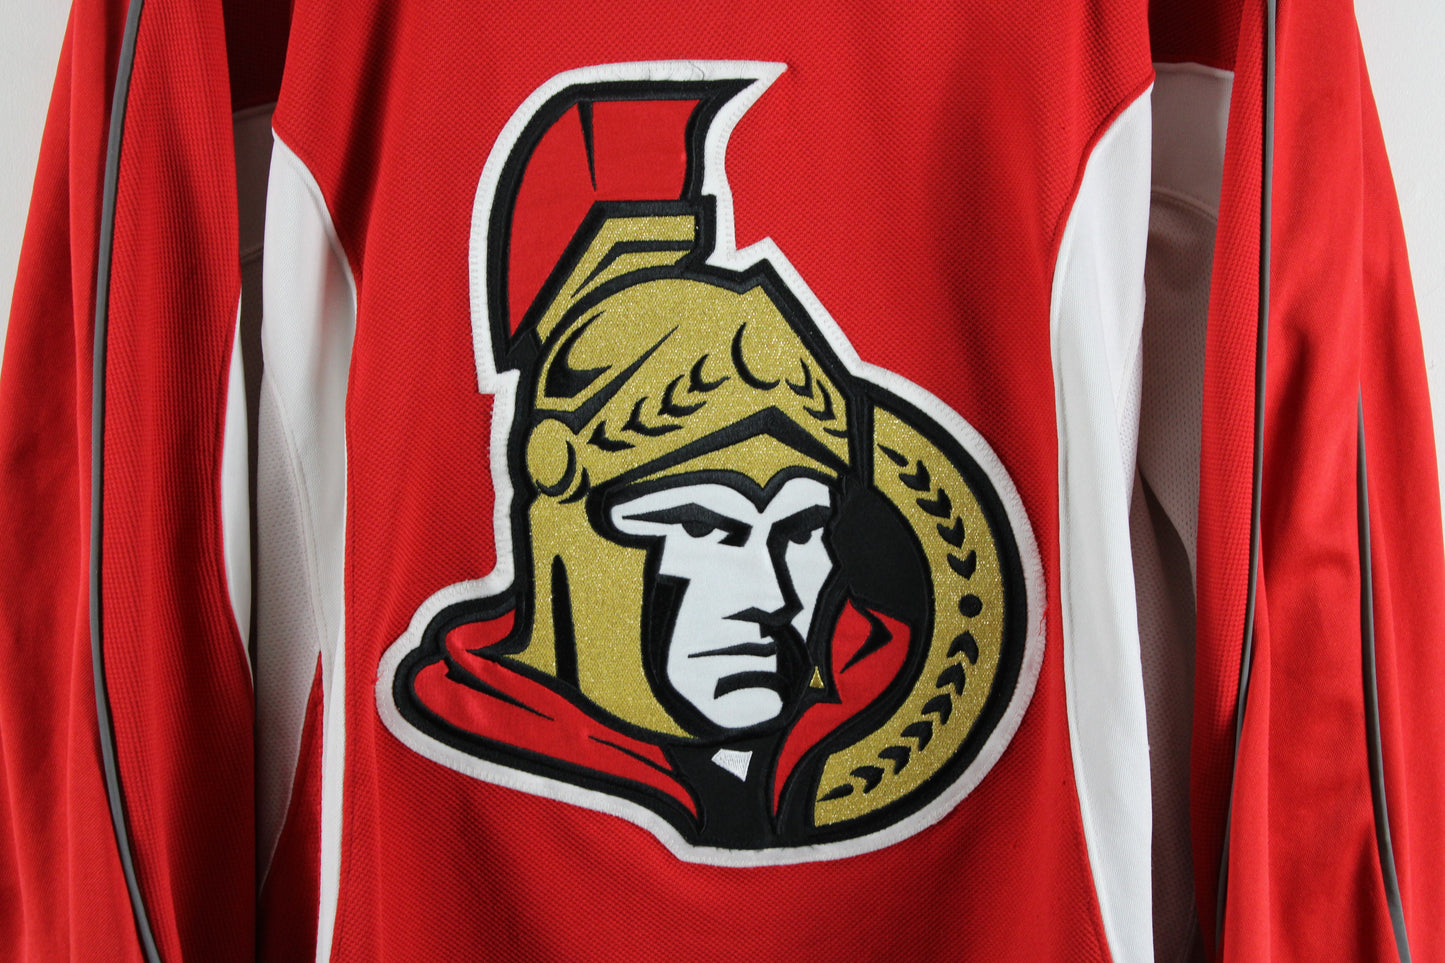 Ottawa Senators Embroidered NHL Reebok Jersey - Extra Extra Extra Large